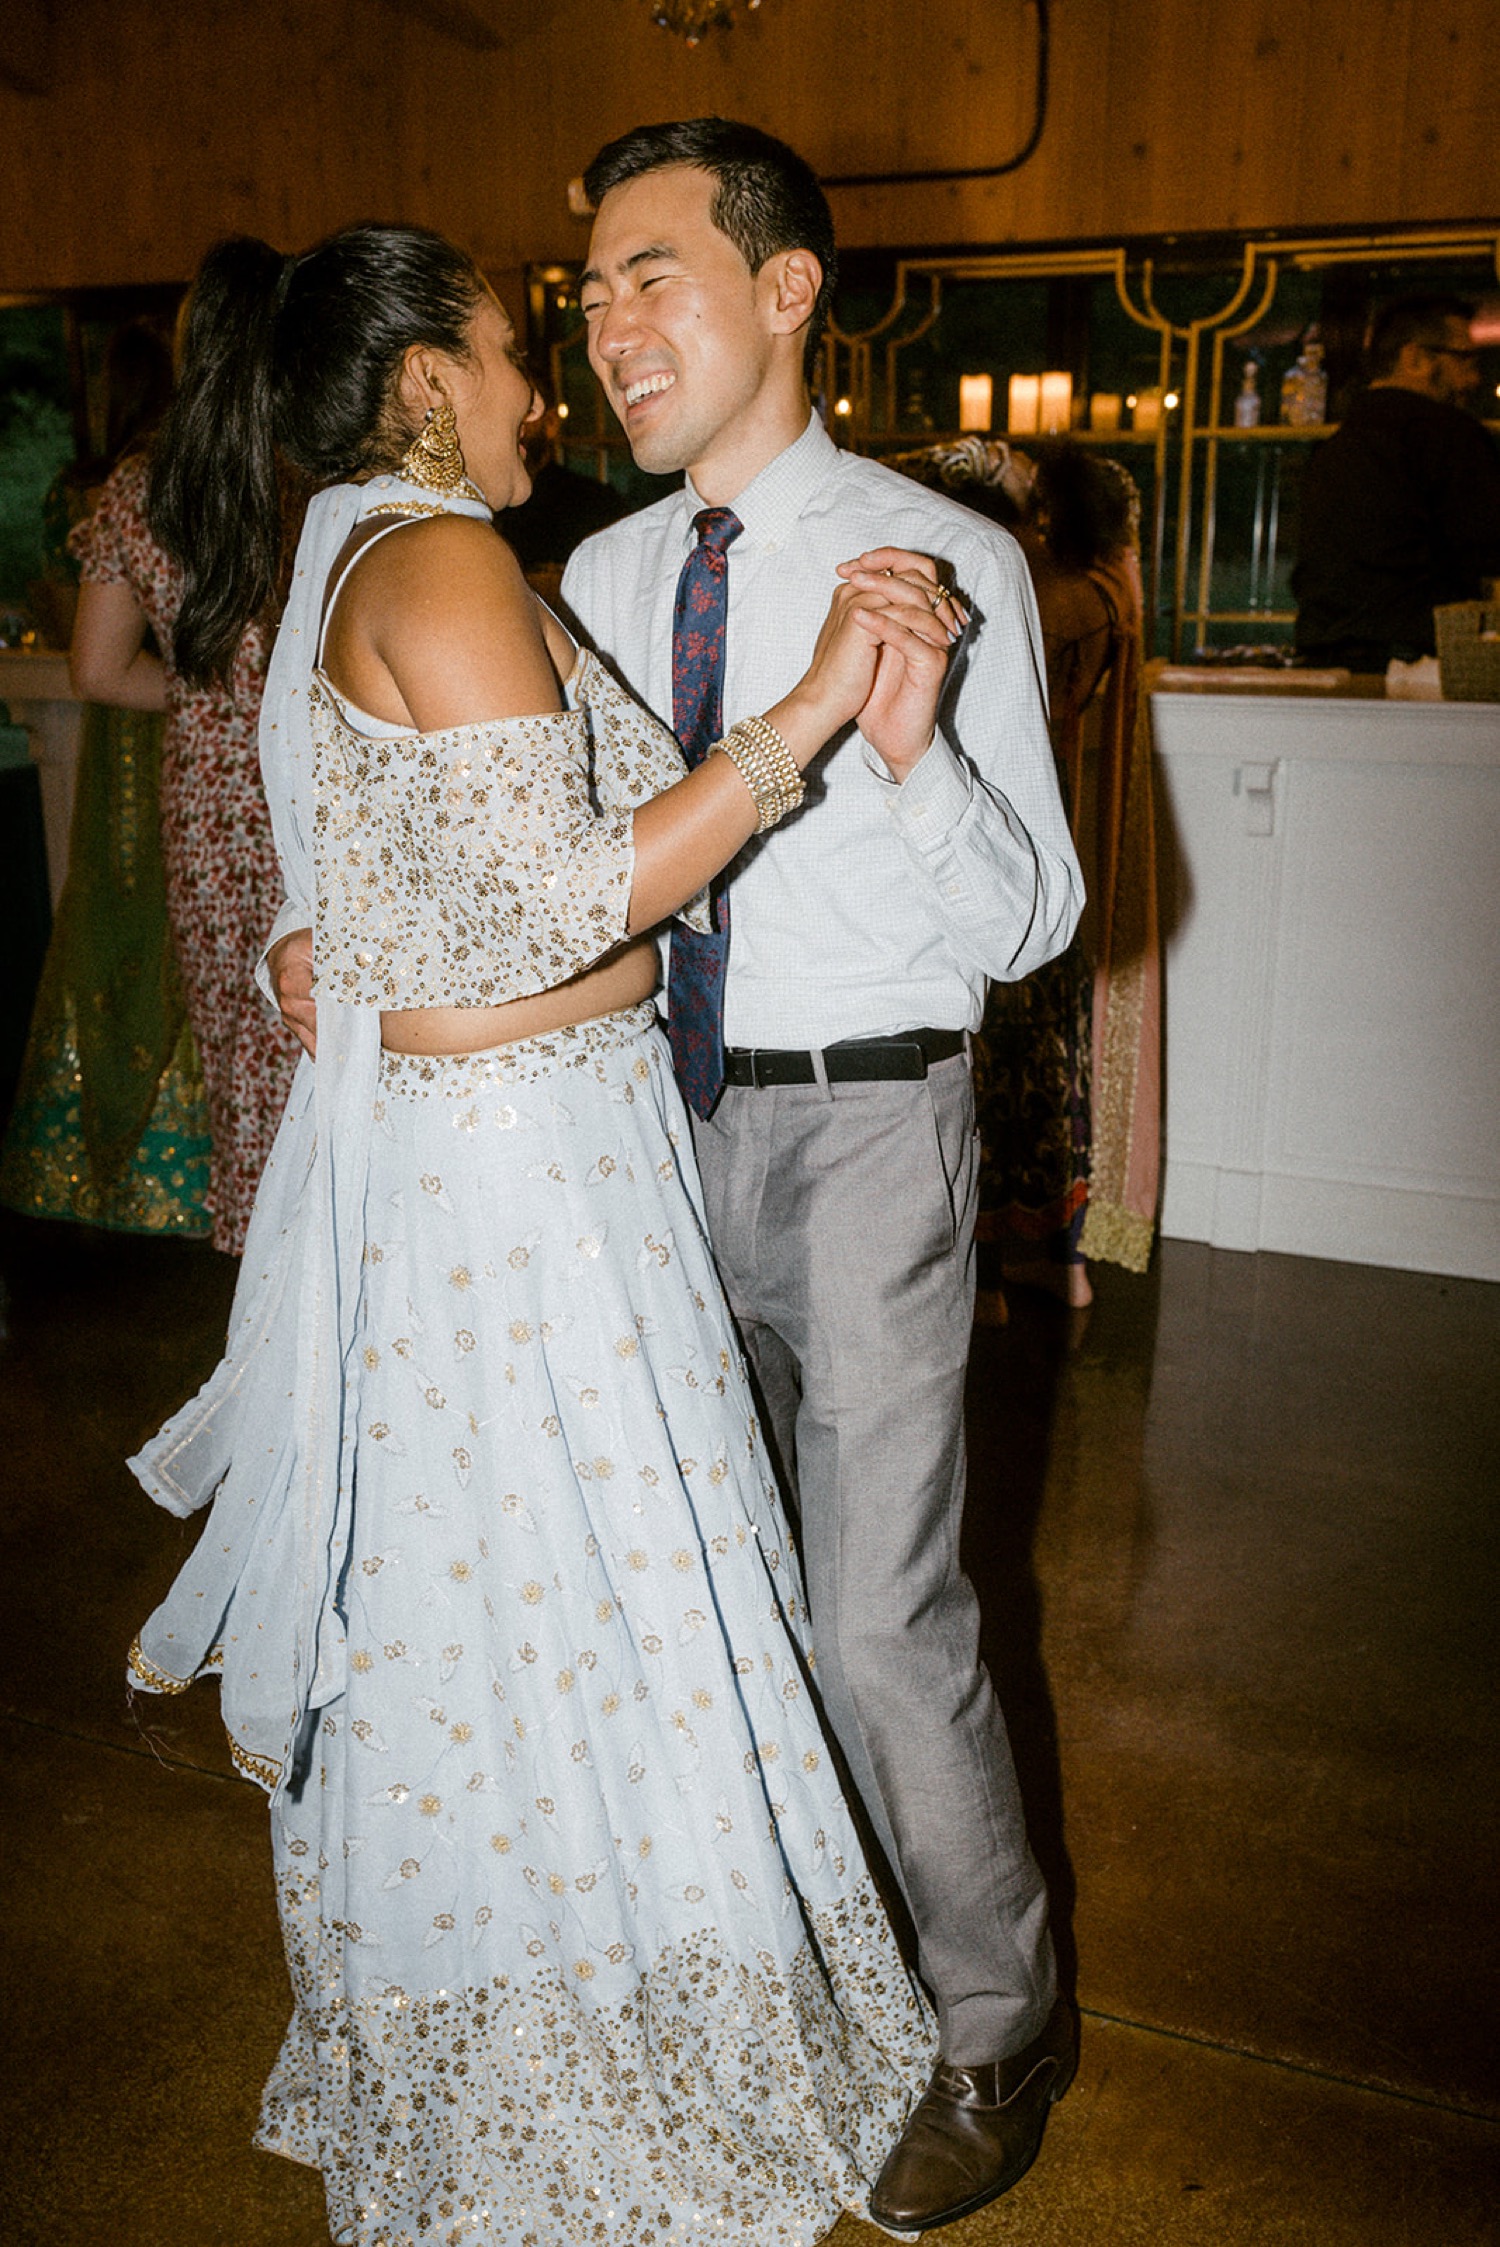 couple slow dancing at wedding reception